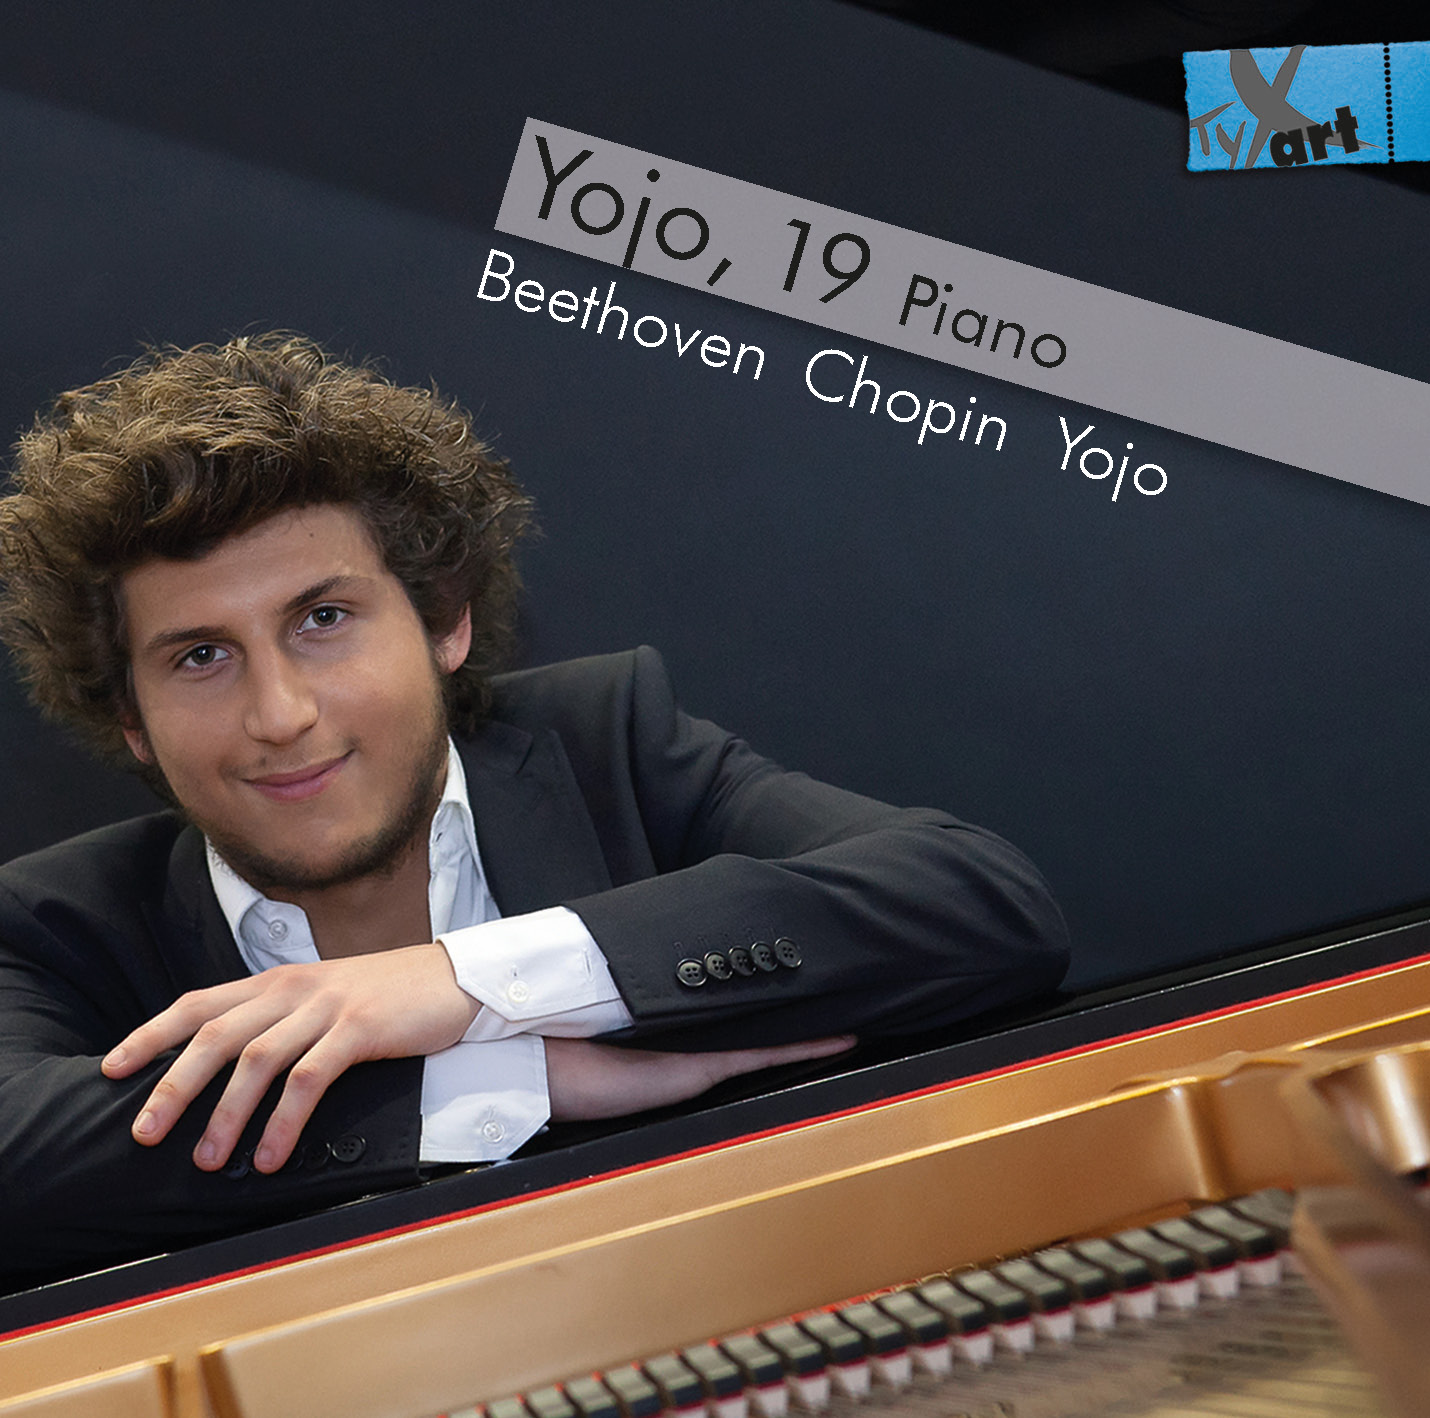 Yojo, 19, Piano - Werke von Beethoven, Chopin, Yojo